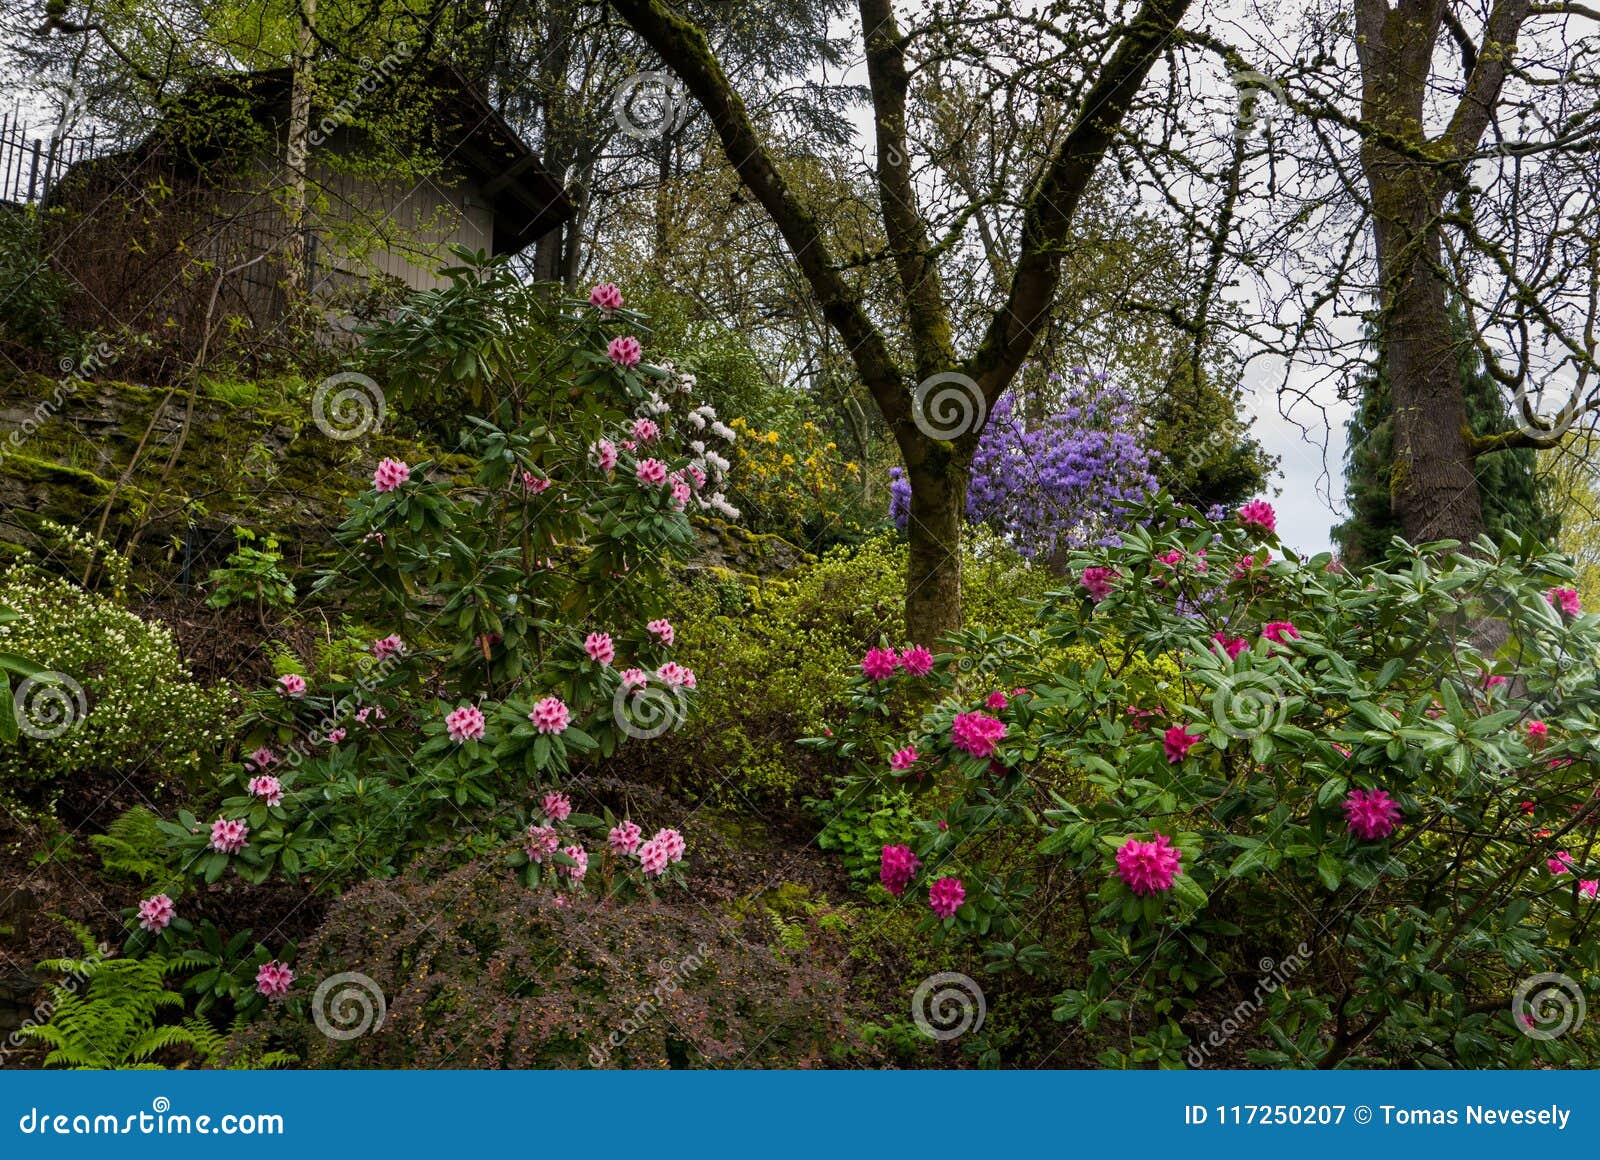 Azaleas In Portland S Crystal Springs Rhododendron Garden Stock